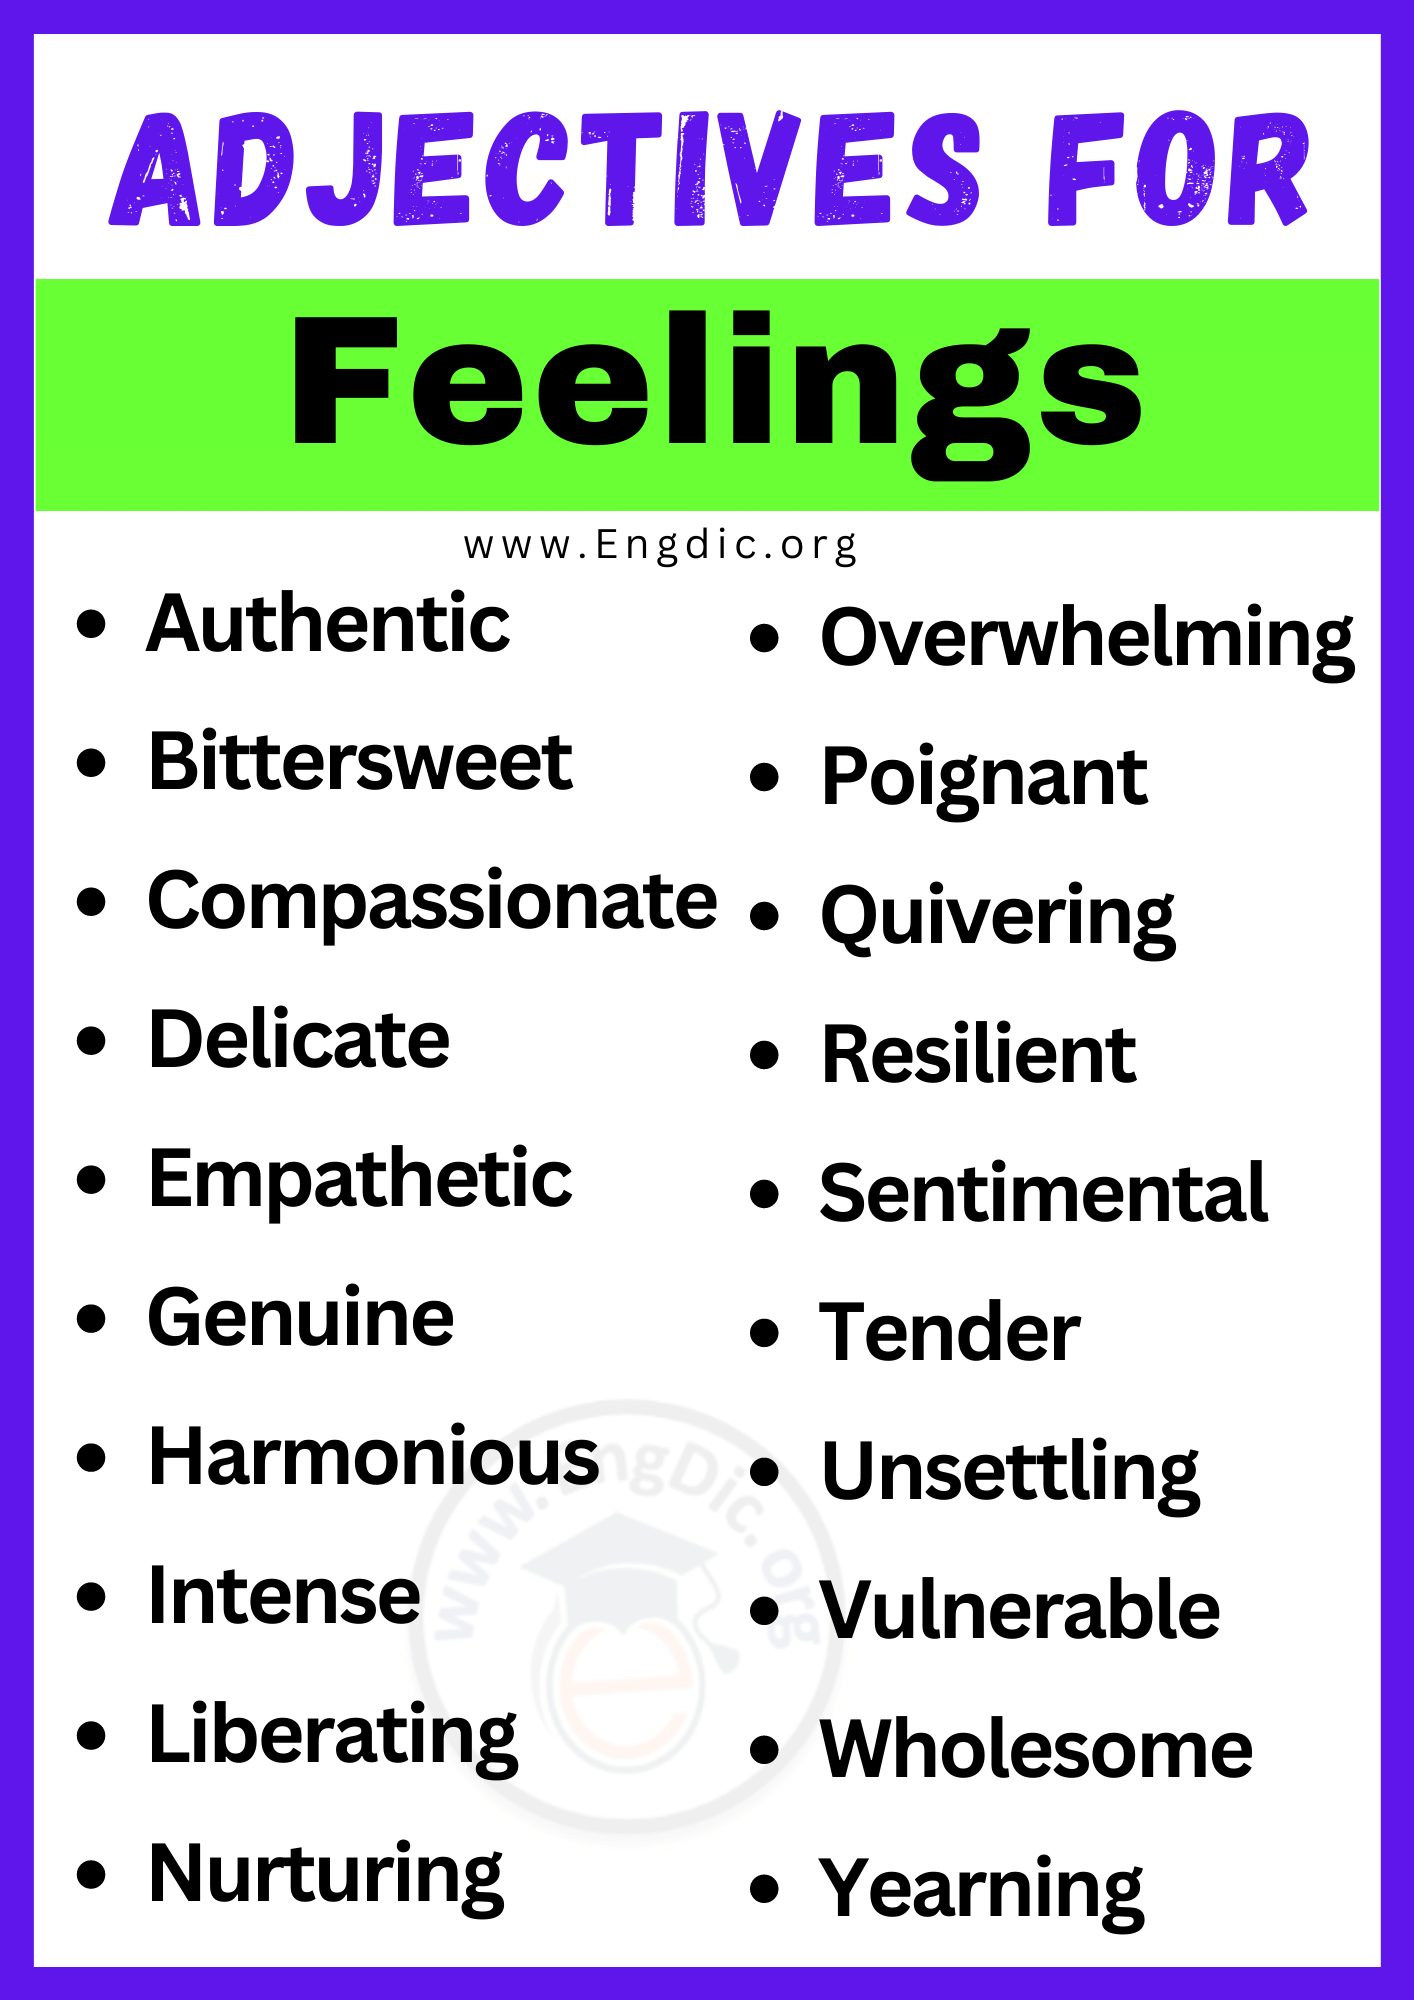 Adjectives for Feelings